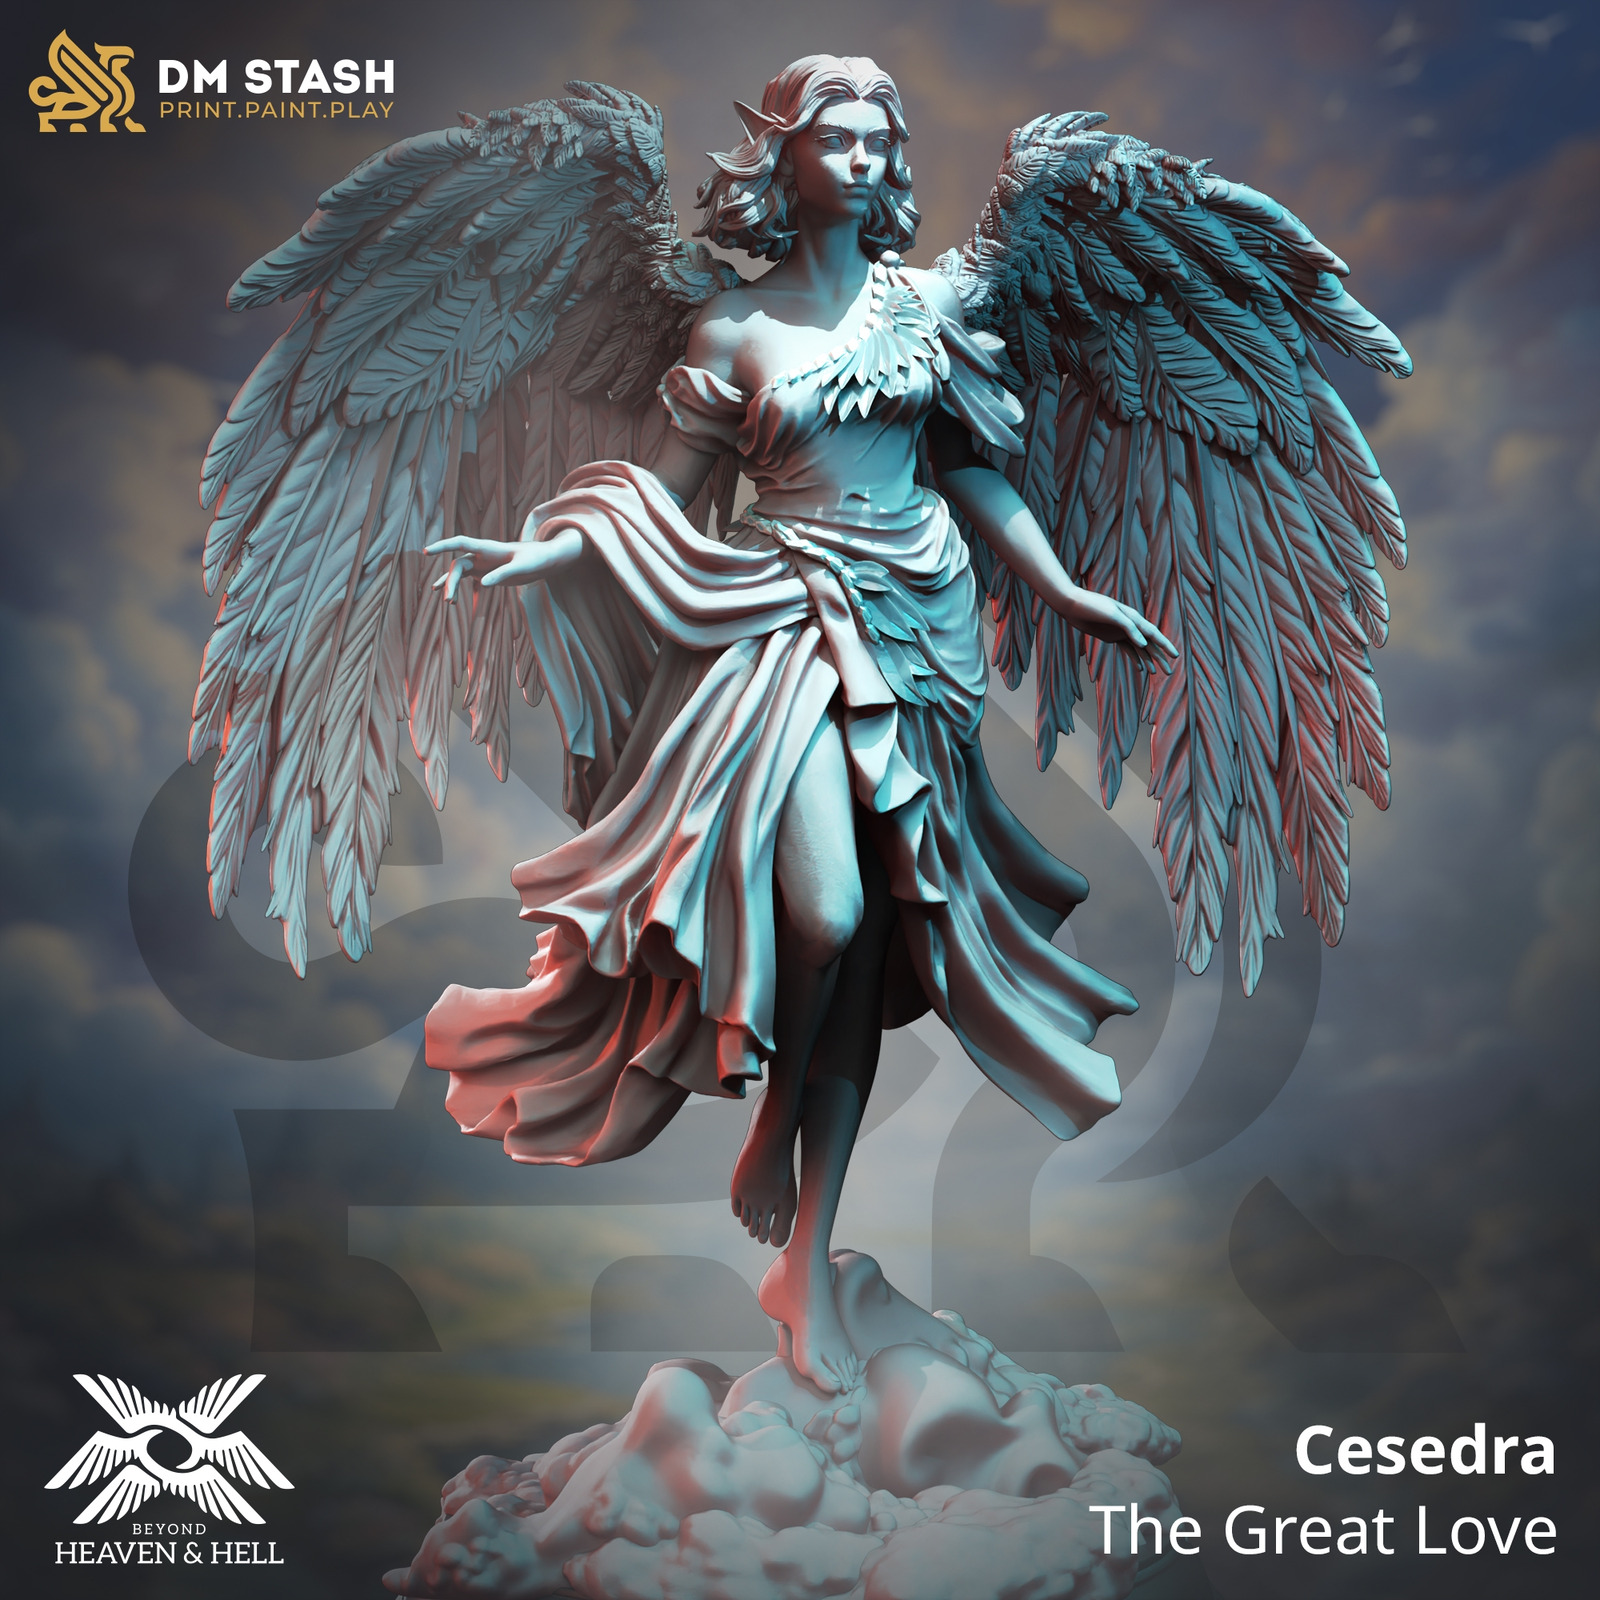 Cesedra - The Great Love| DM Stash | DnD | Fantasy Miniature